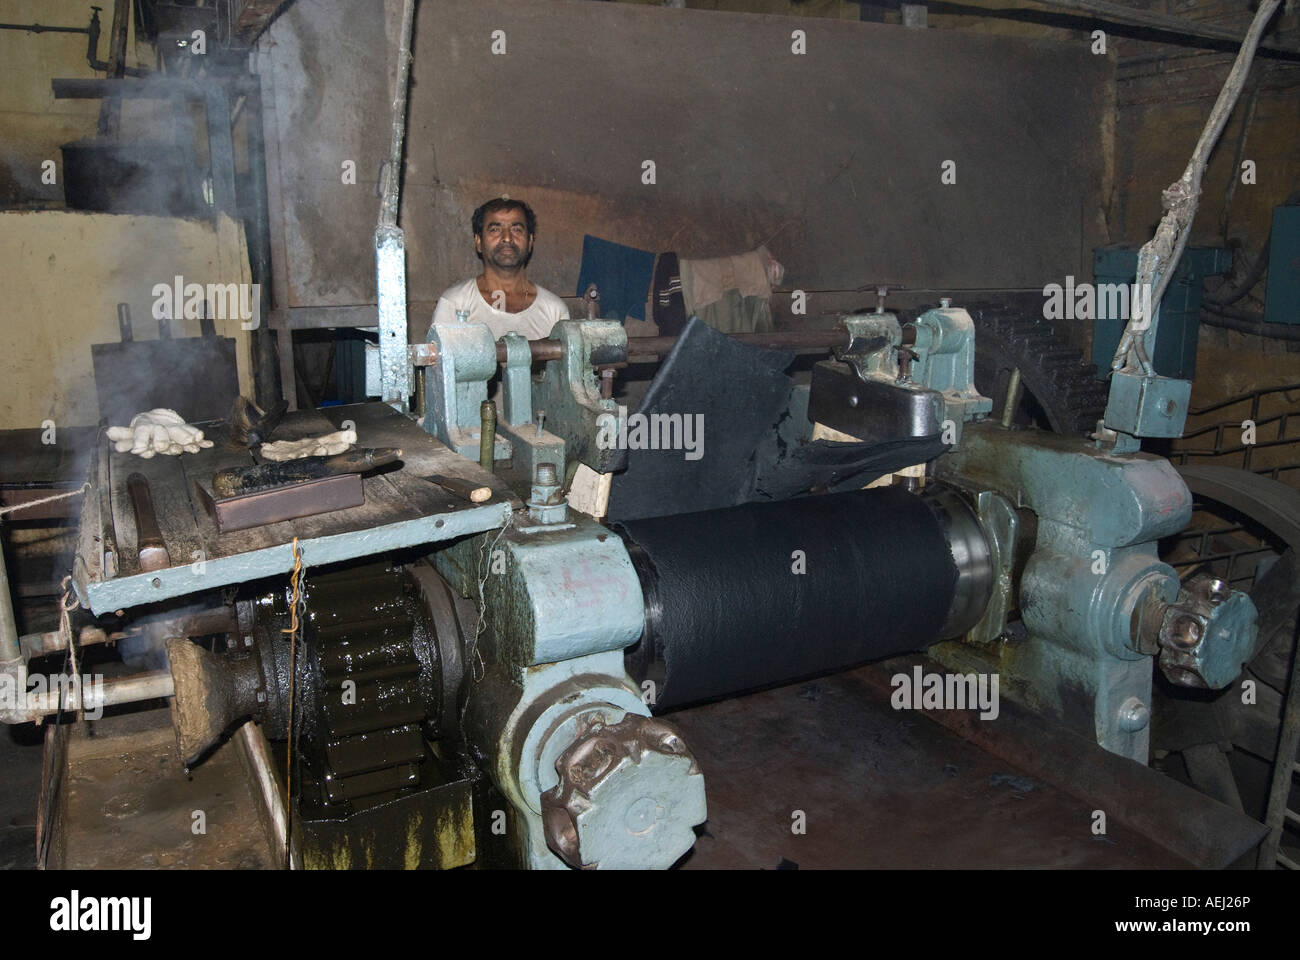 A rubber factory in Kolkata India Stock Photo - Alamy